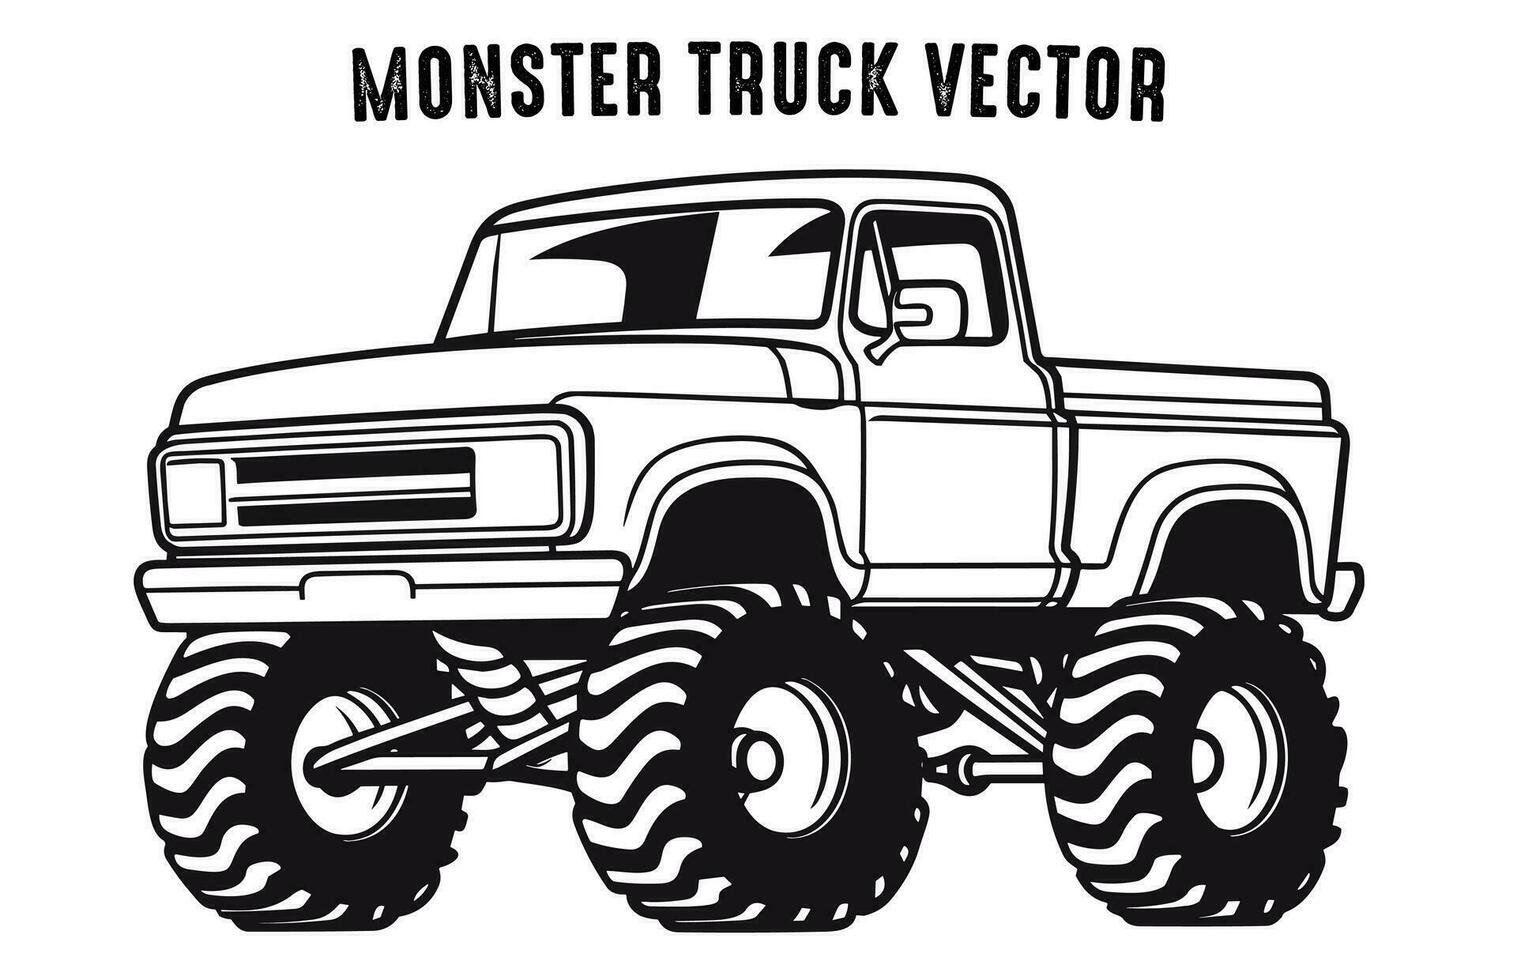 Clásico monstruo camión vector contorno aislado en un blanco antecedentes